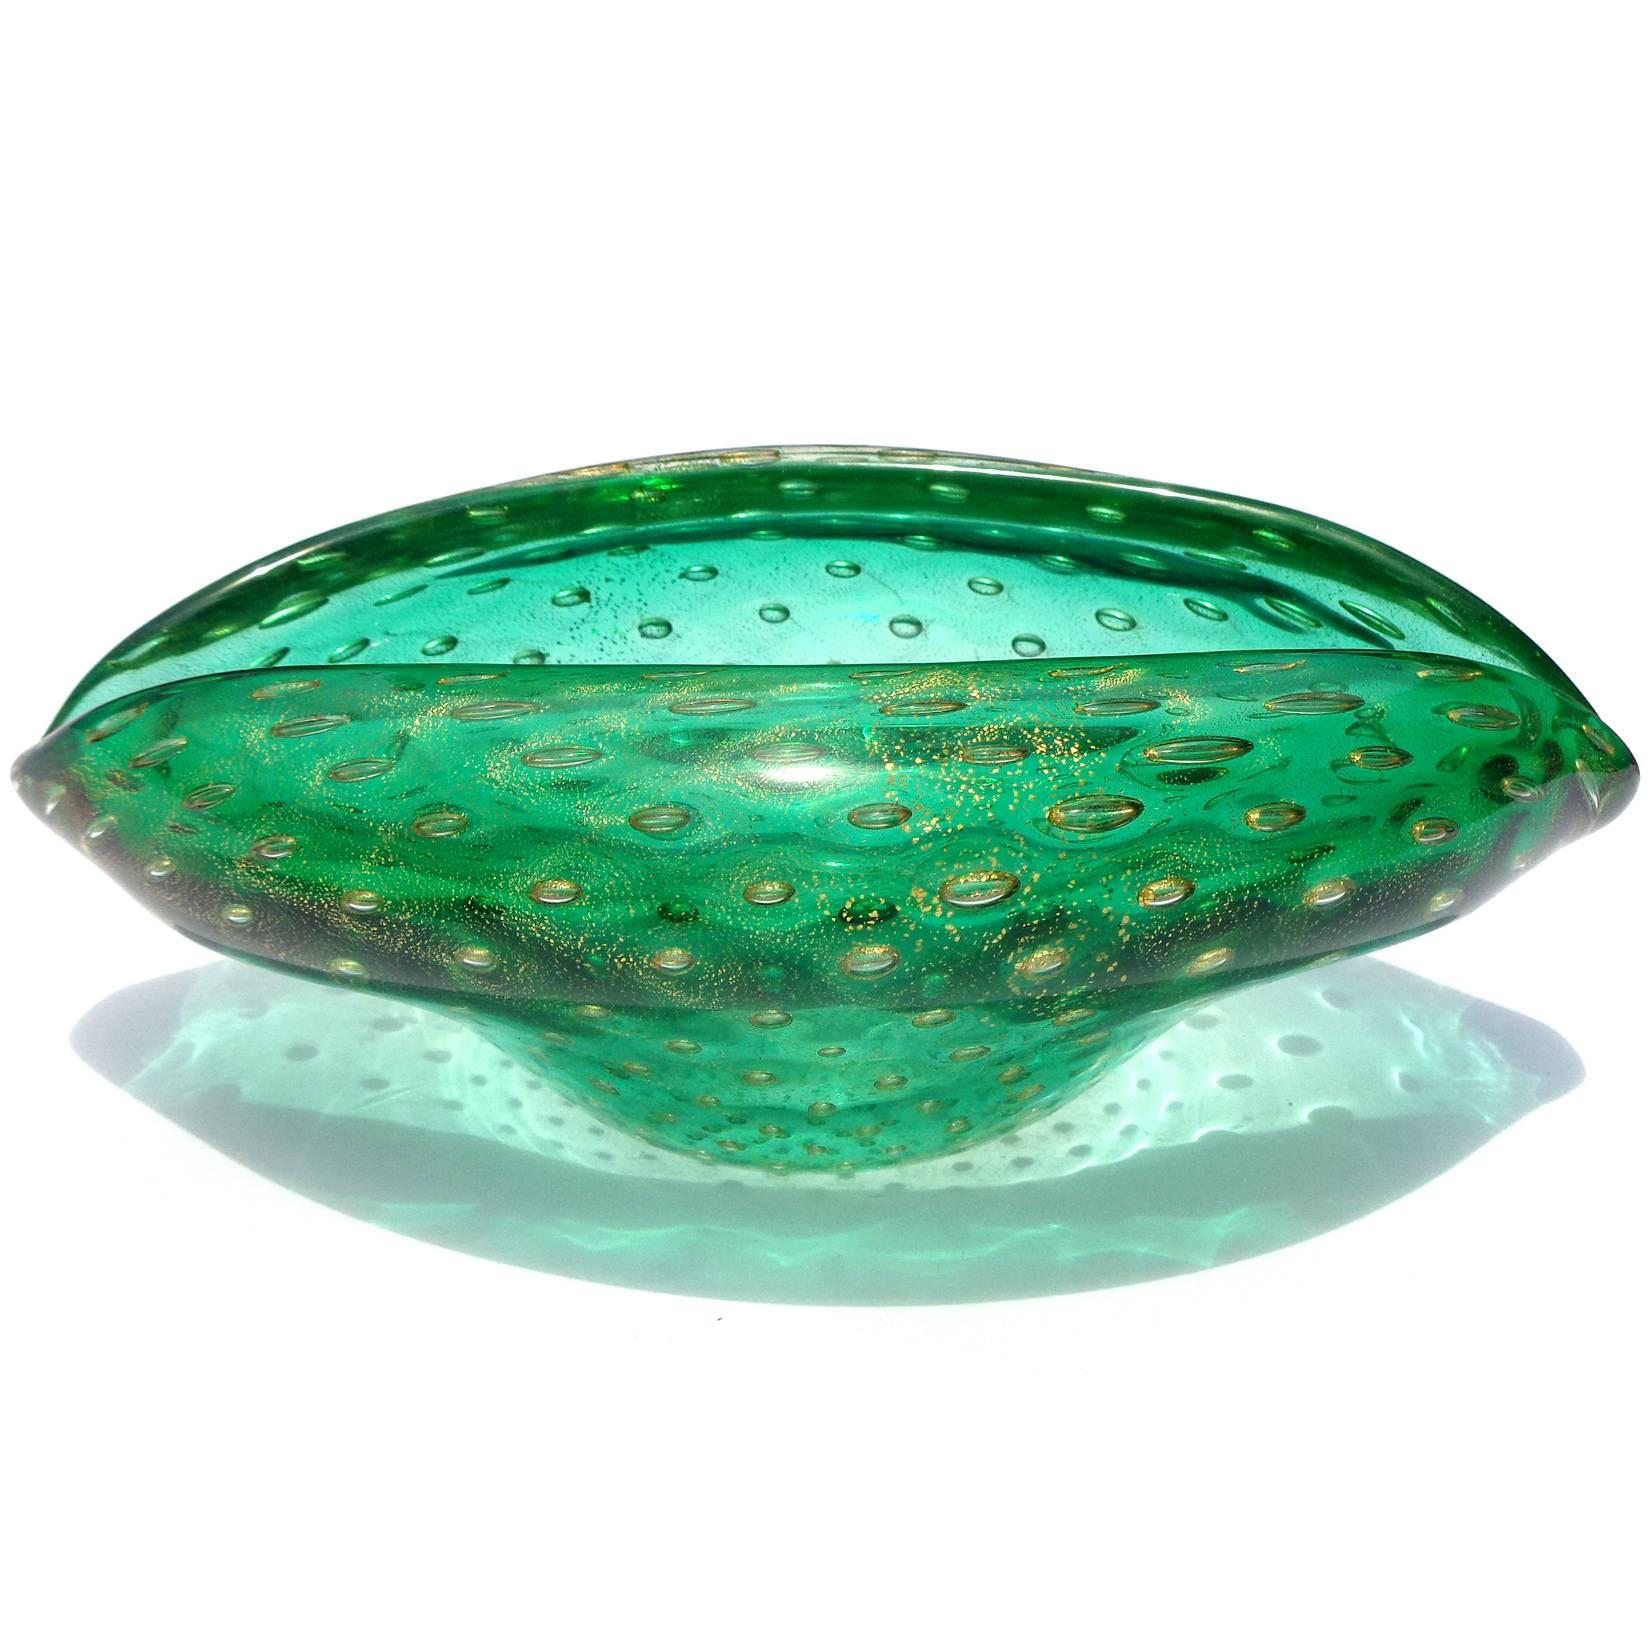 Unique Murano hand blown green and gold flecks art glass clam shell decorative bowl. Attributed to designer Archimede Seguso. The piece is done in "Bullicante" technique.
